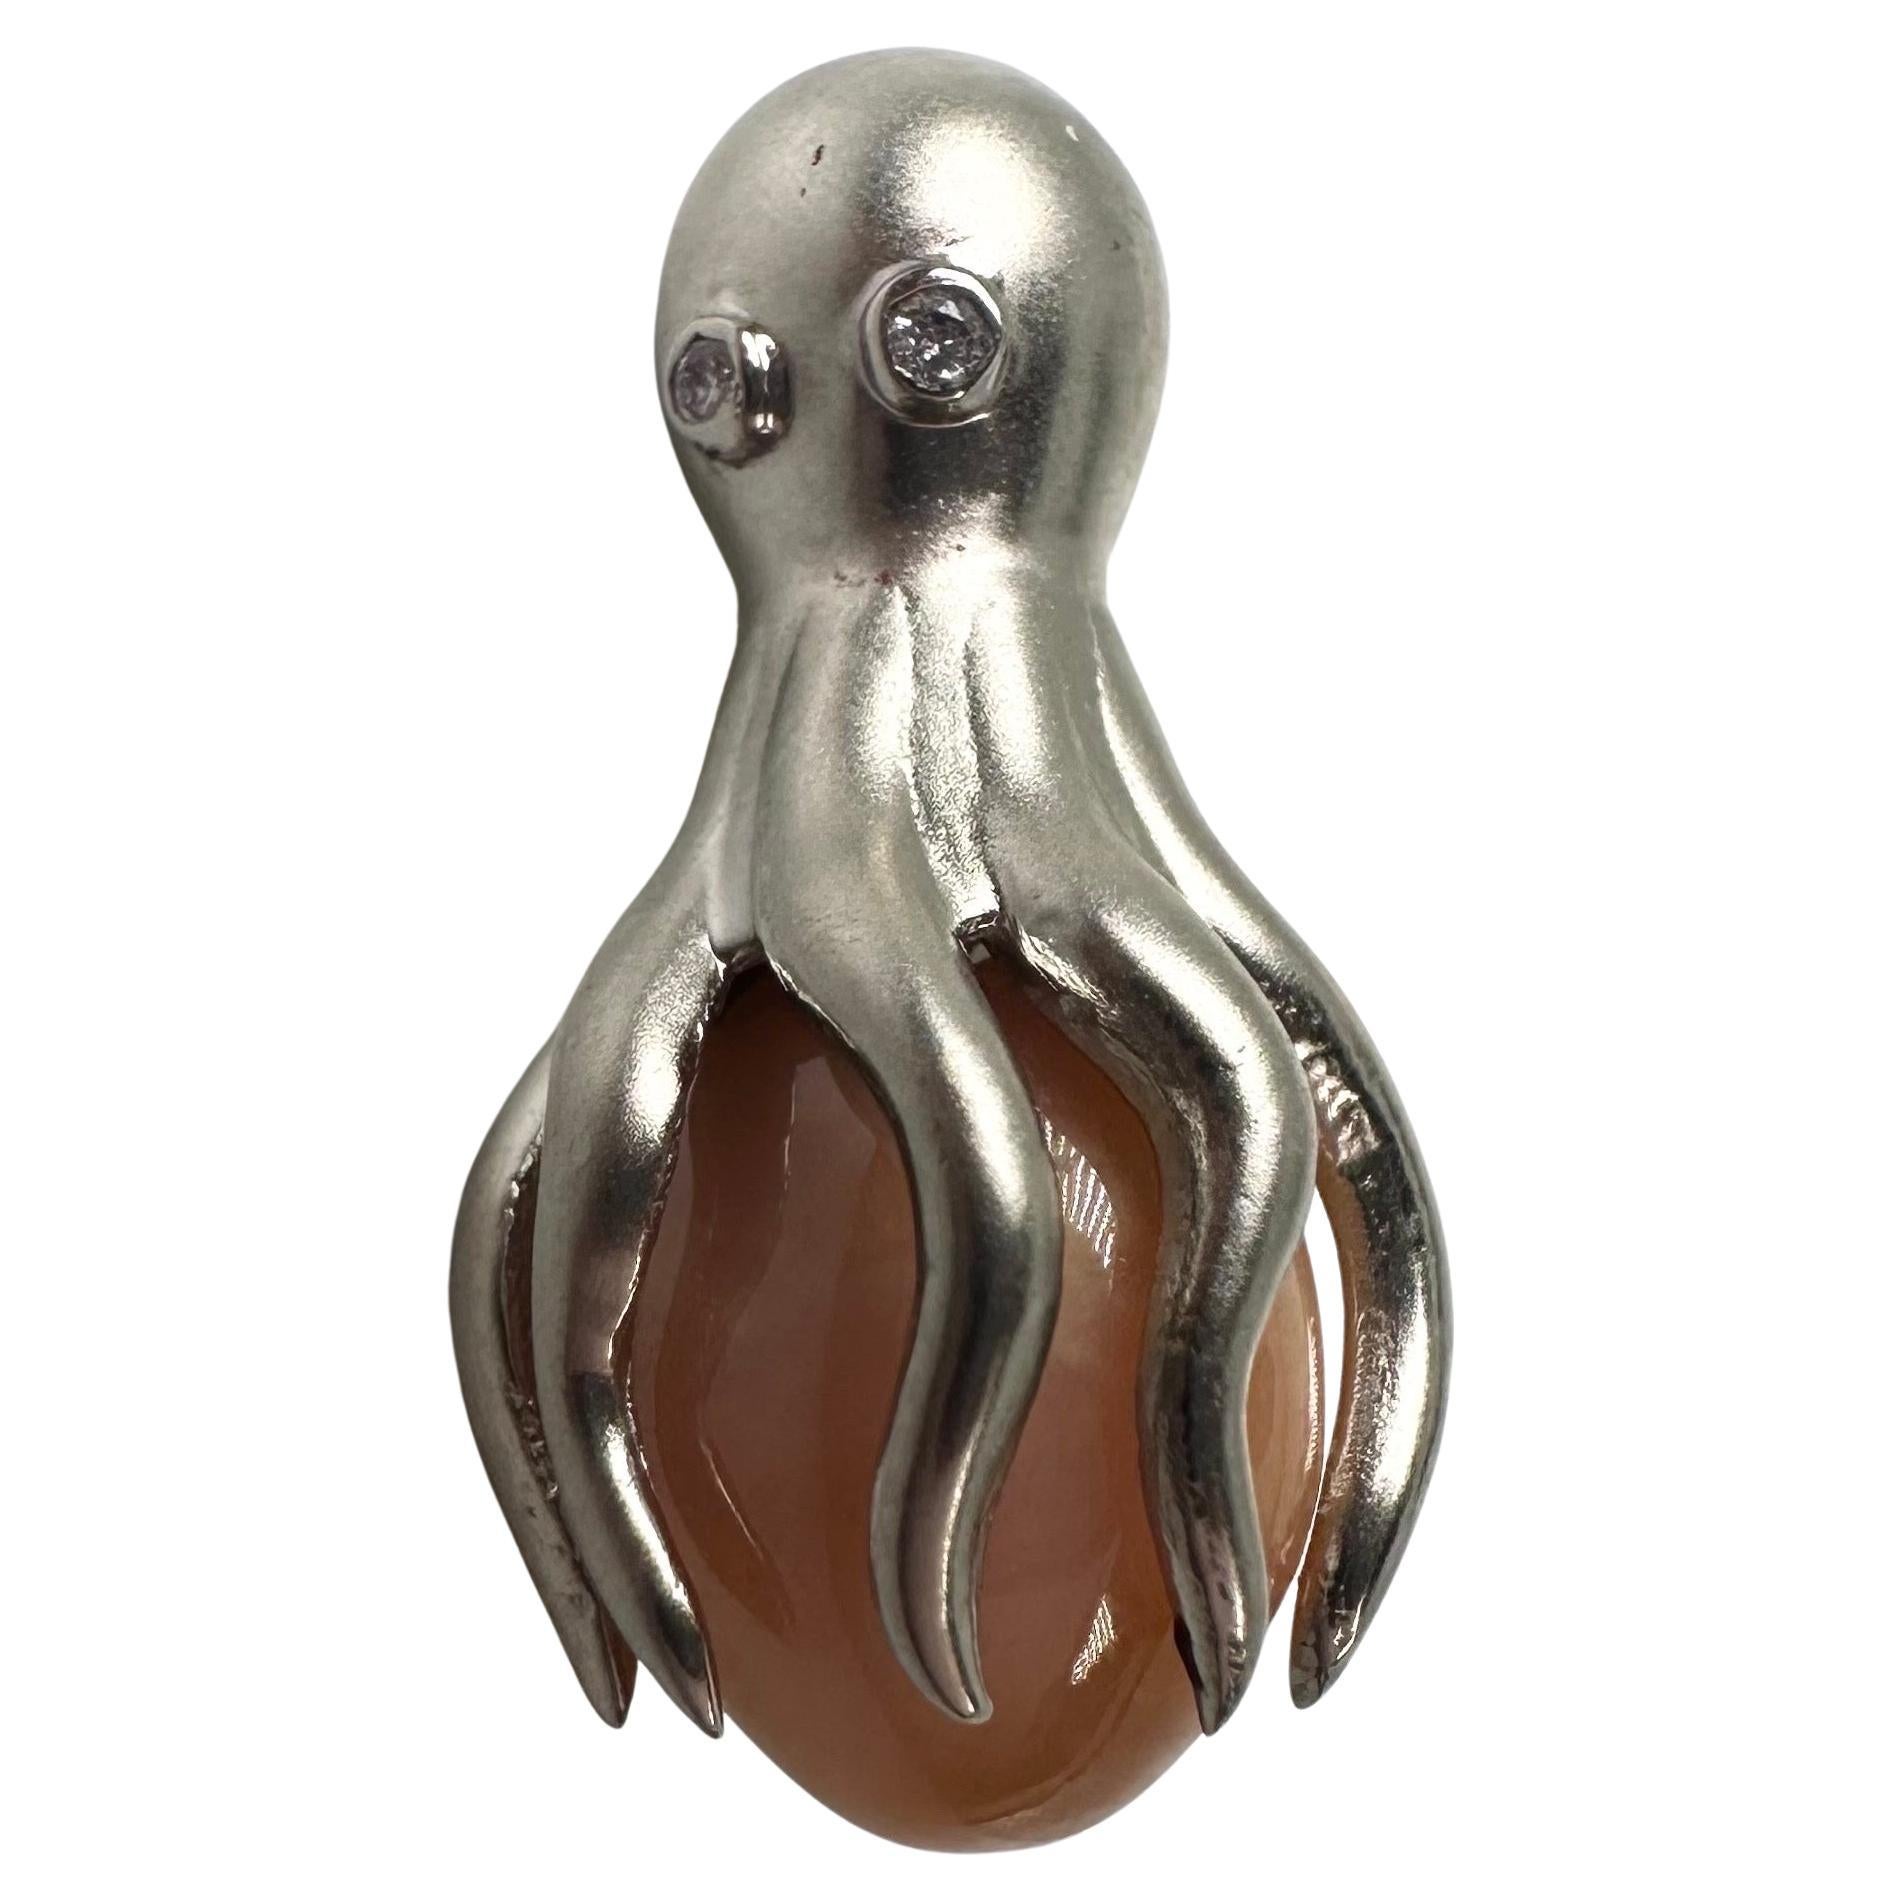 Rare conch pearl pendant octopus pendant 14KT gold